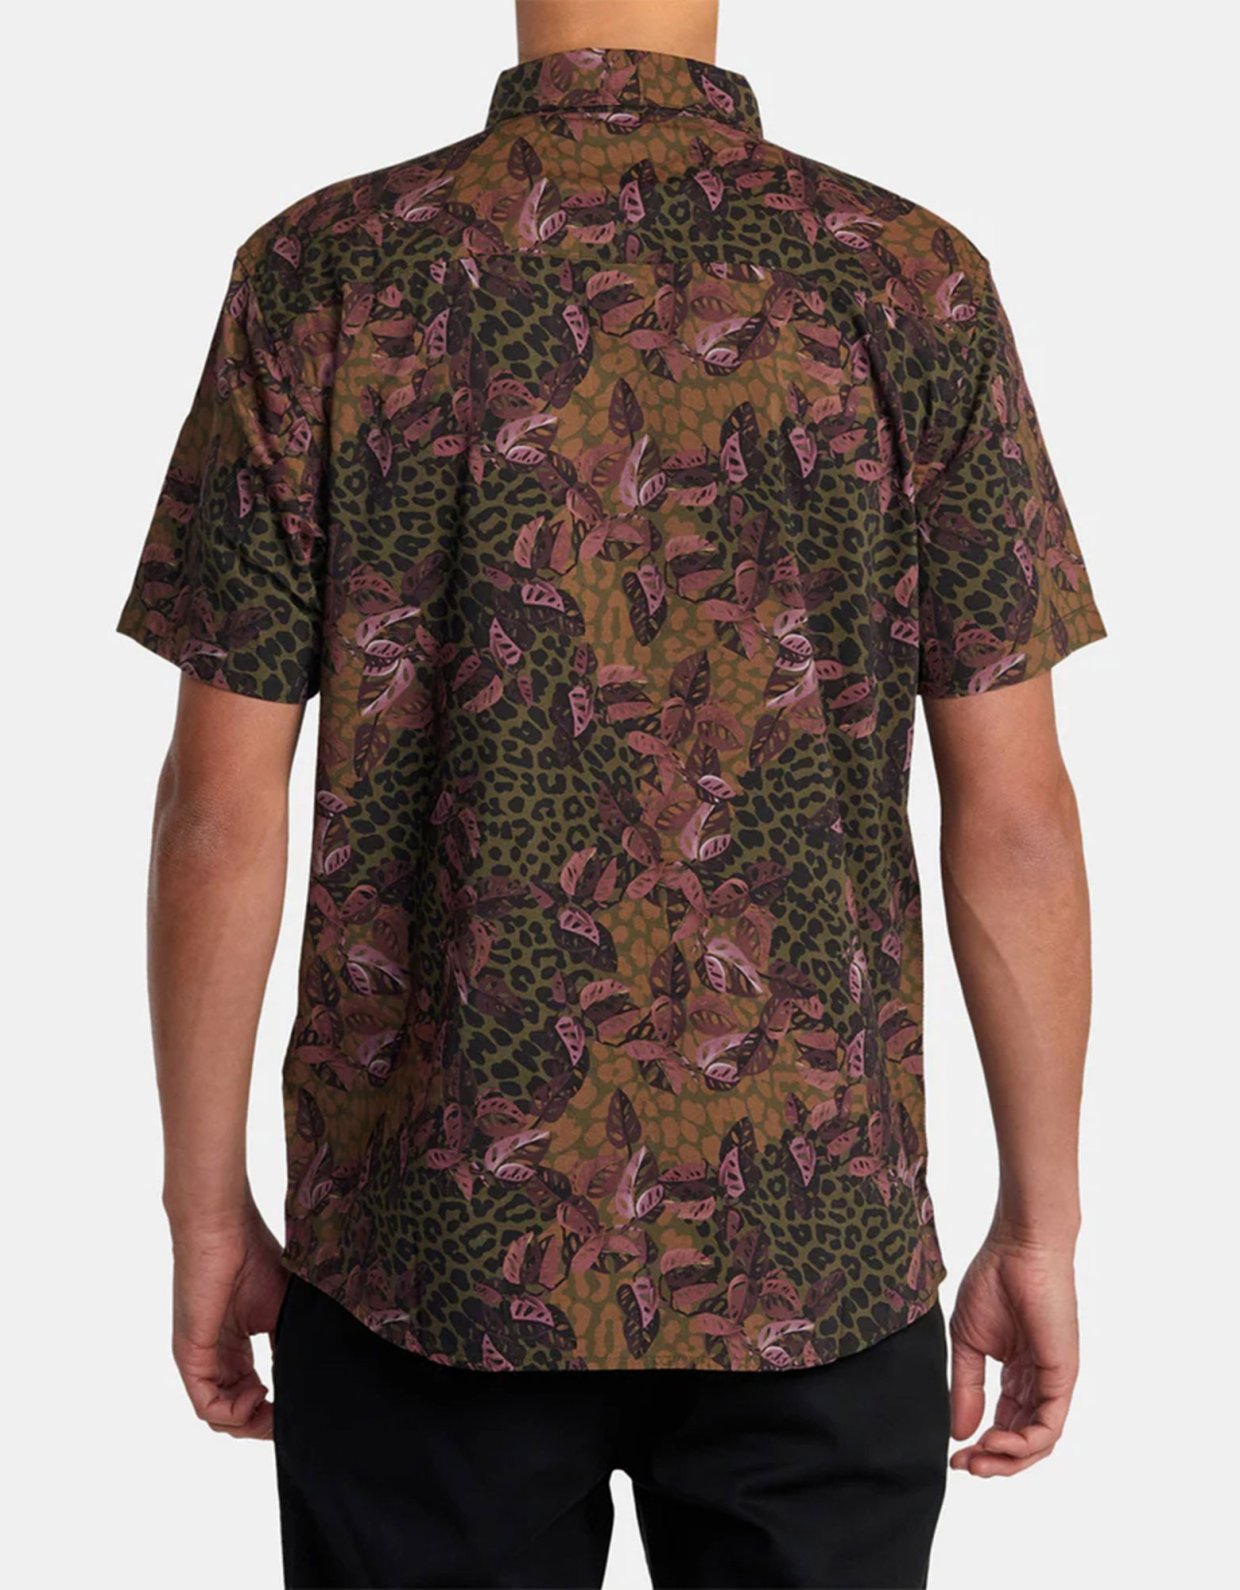 Rvca Anytime short sleeve animal printed floral shirt